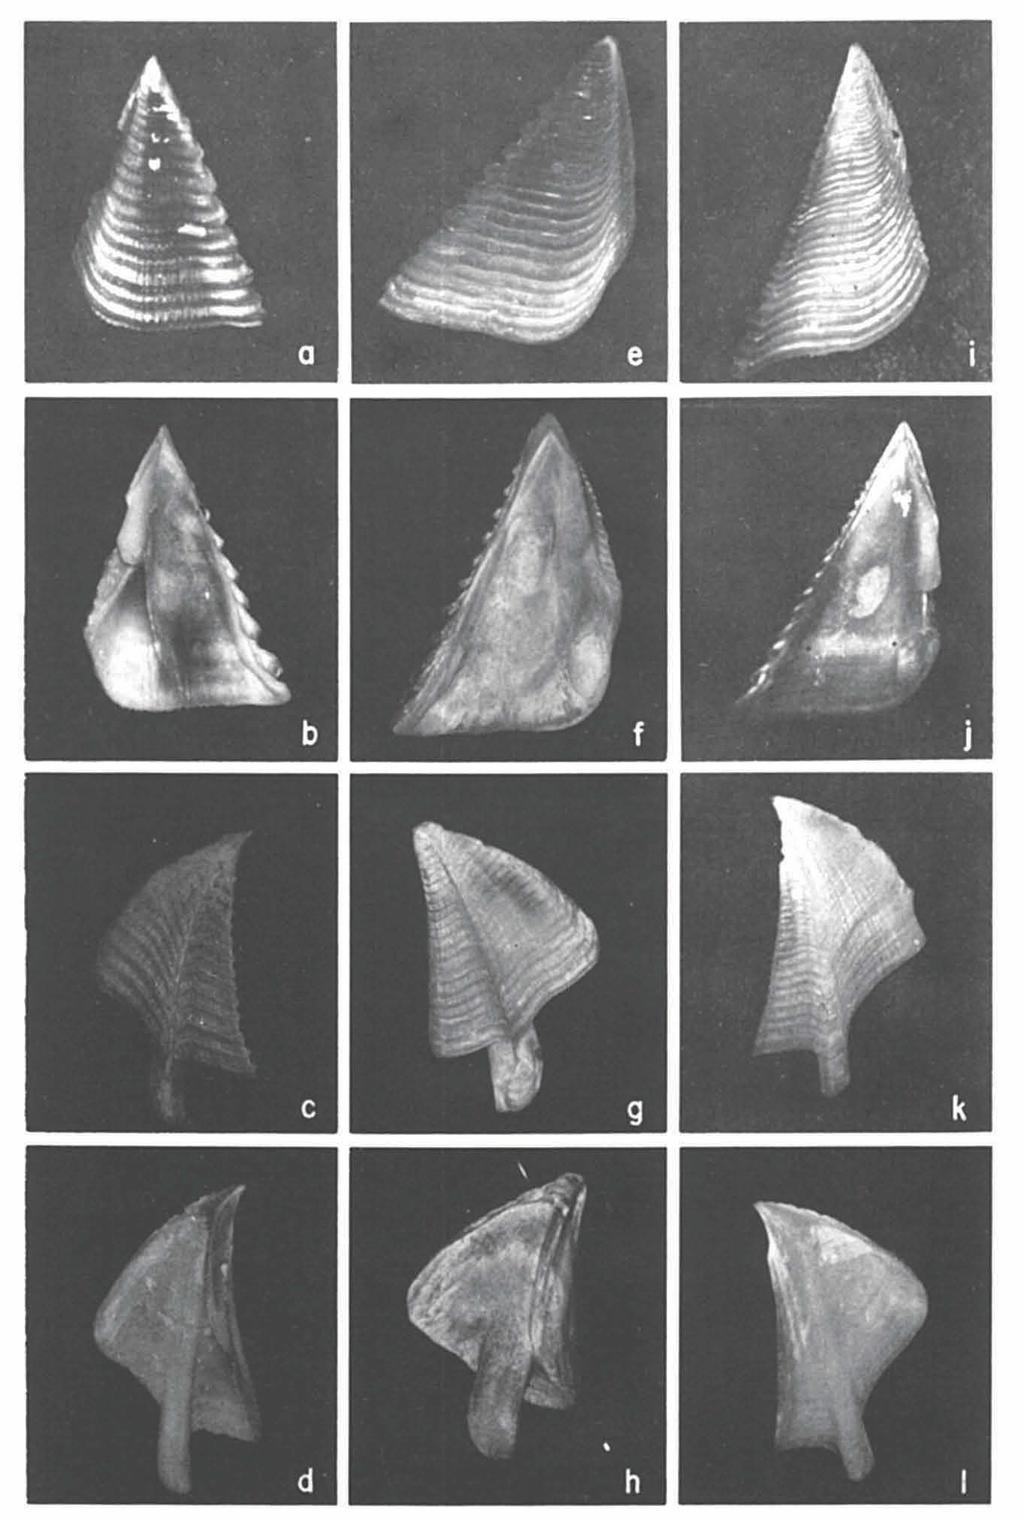 24 ZOOLOGISCHE VERHANDELINGEN 235 (1986) Fig. 6. Megabalanus azoricus (Pilsbry). a-d, external and internal views of opercular valves of syntype (USNM 48126). Megabalanus californicus (Pilsbry).